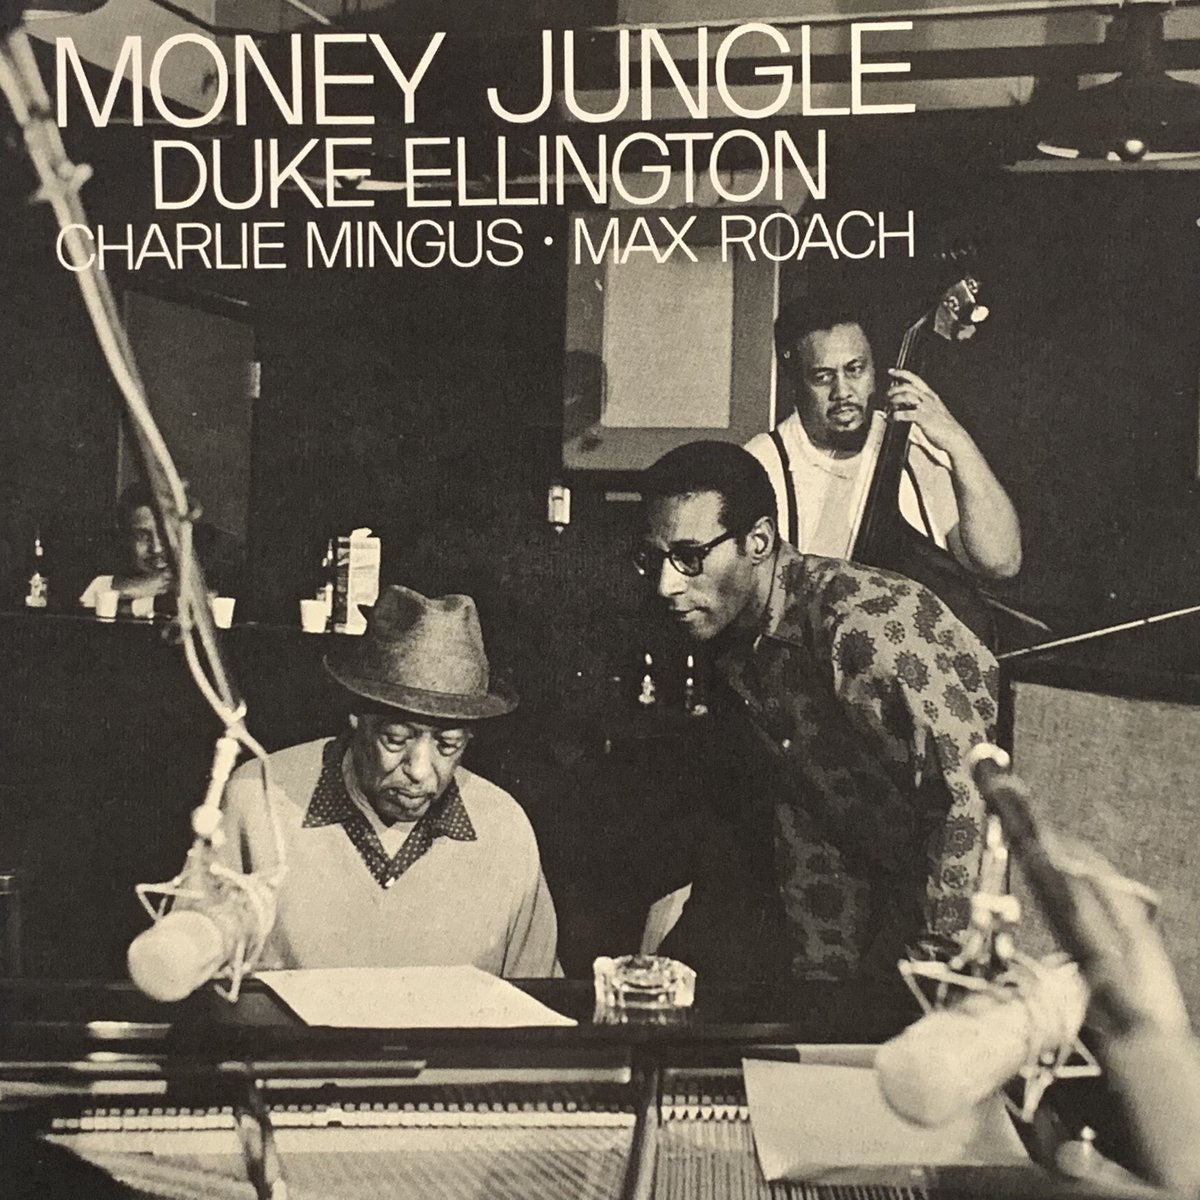 MONEY JUNGLE DUKE ELLINGTON CHARLIE MINGUS MAX ROACH Recorded Sept. 17, 1962